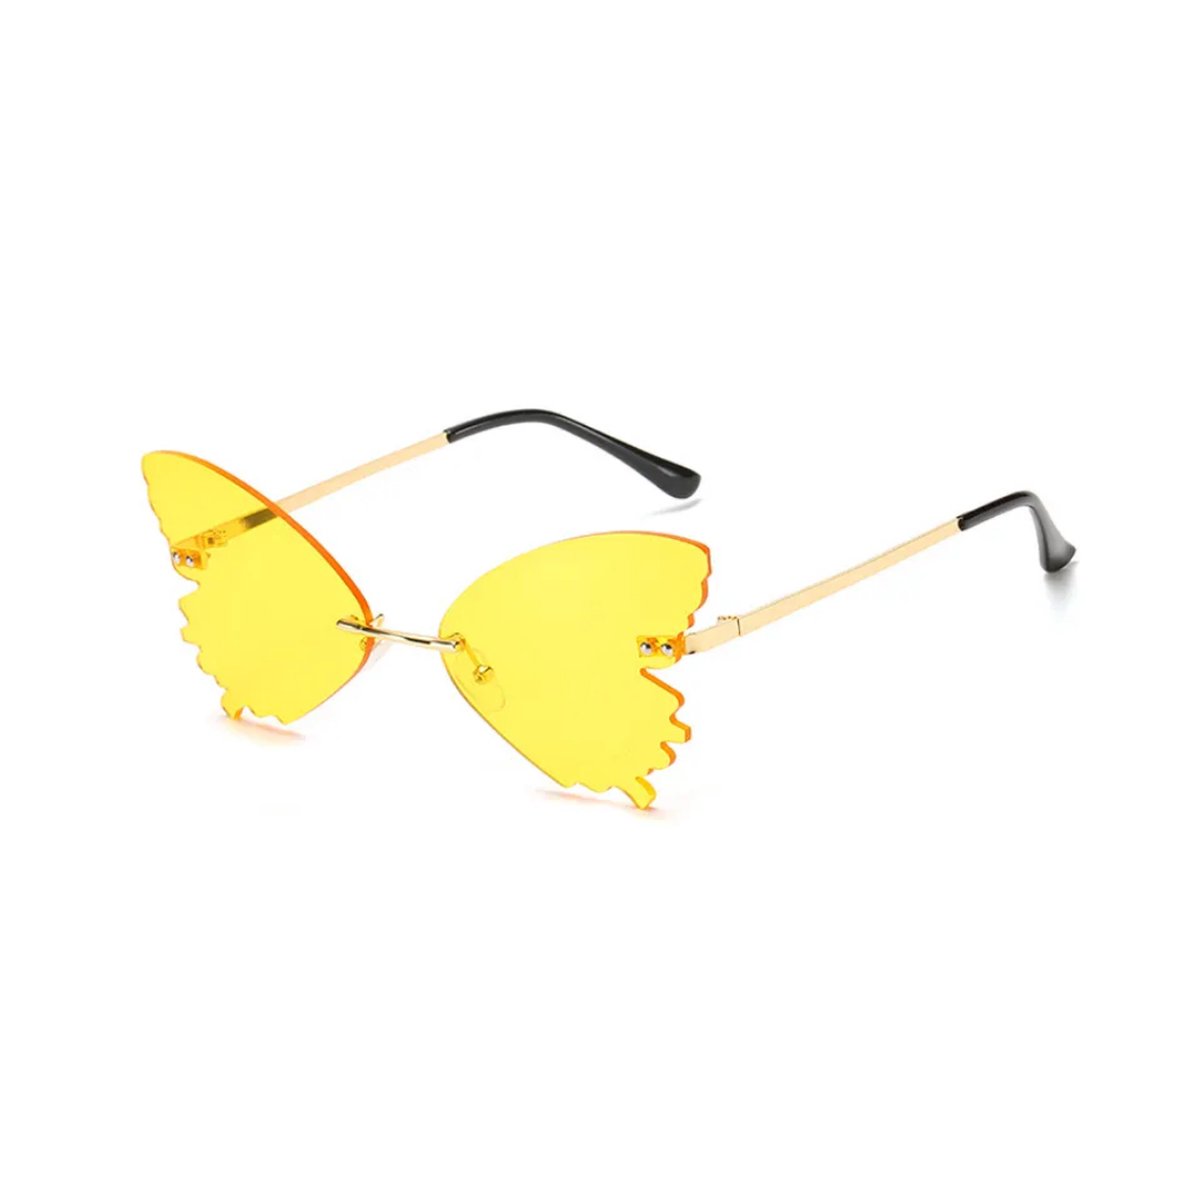 Vlinder zonnebril - Geel - festivalbril / hippie bril / technobril / rave bril / butterfly glasses / retro zonnebril